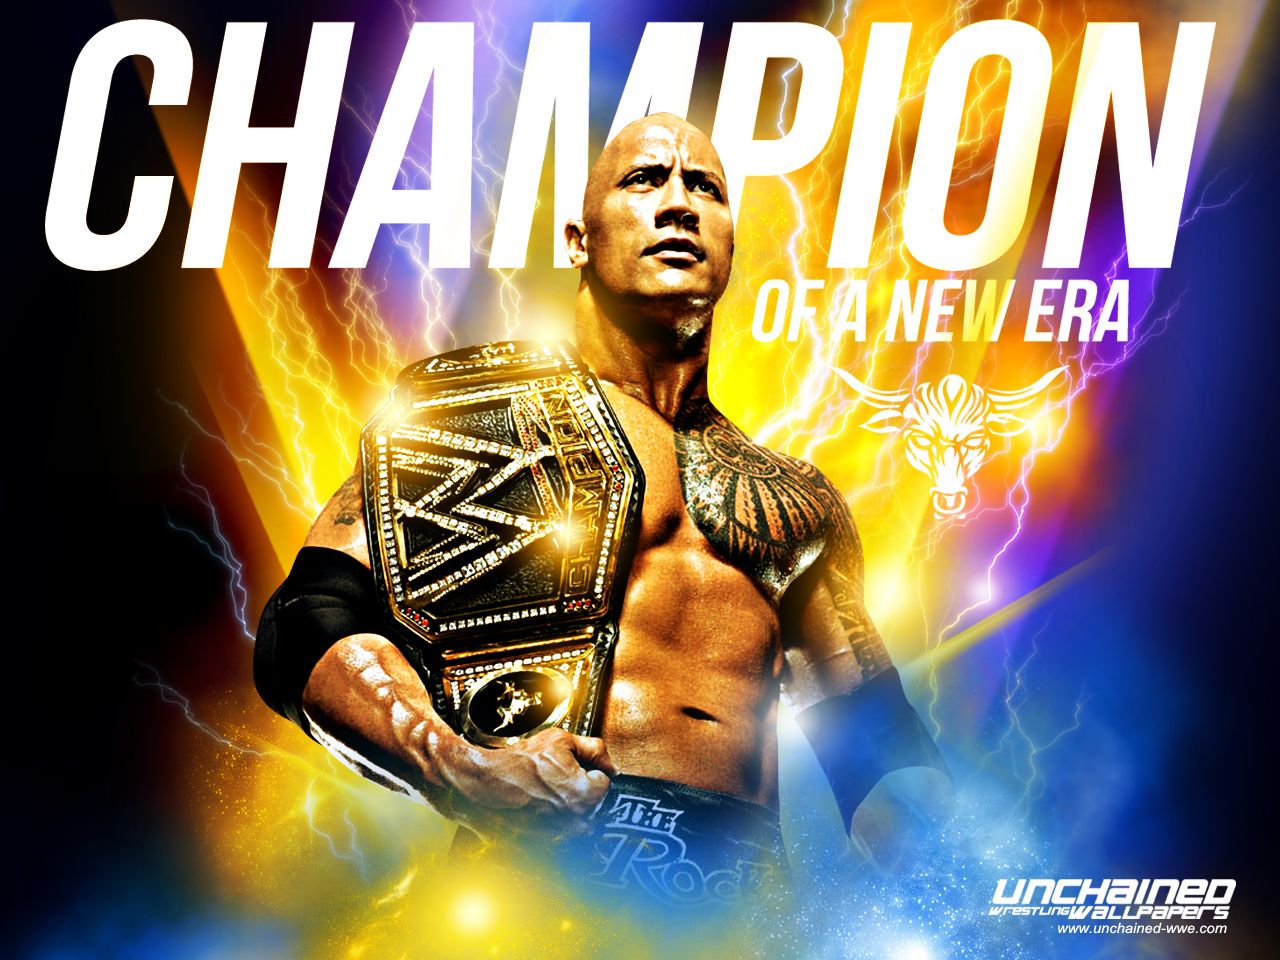 The Rock - Champion of a new Era - WWE Wallpaper (33707028) - Fanpop